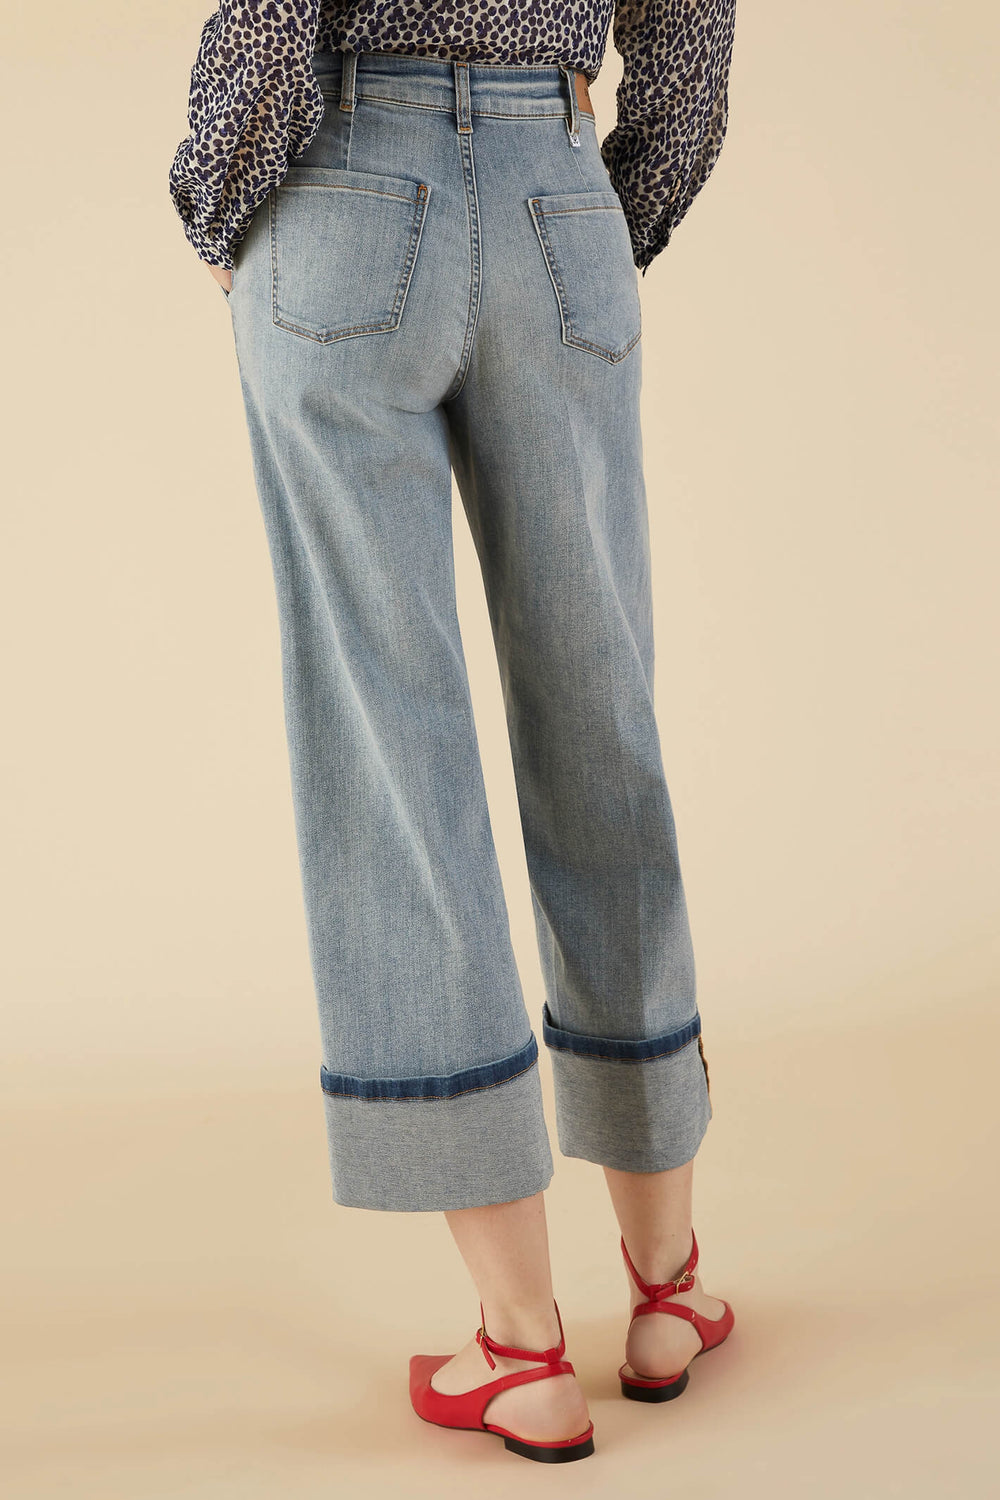 Emme Edotto 2351810435200 Blue Denim Cropped Jeans - Olivia Grace Fashion